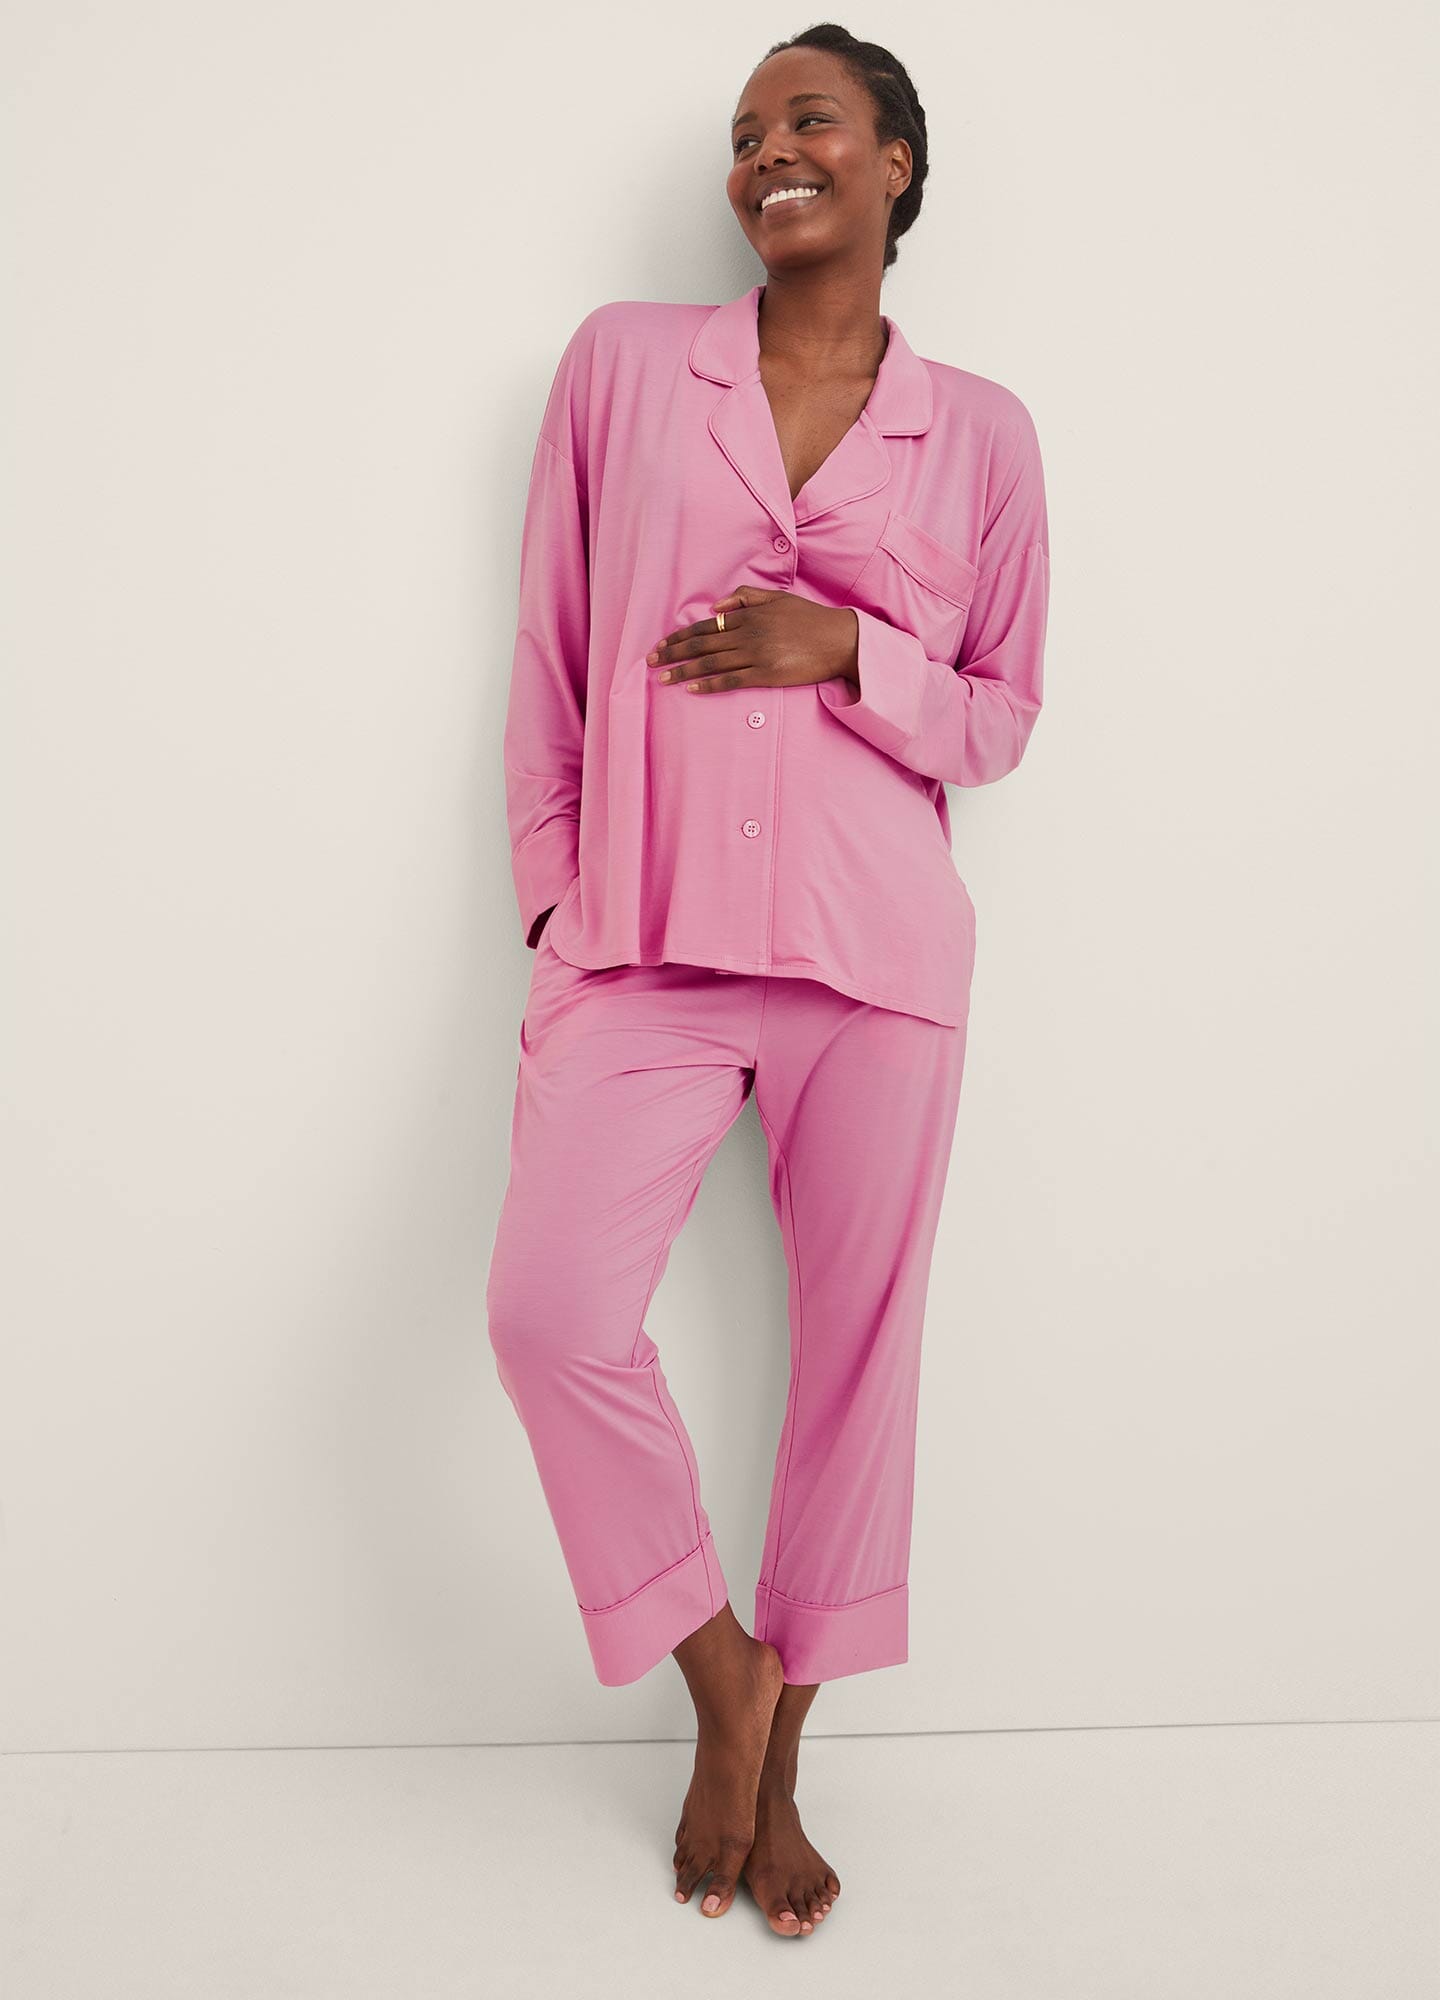 Pink Pajamas, Pink Pjs